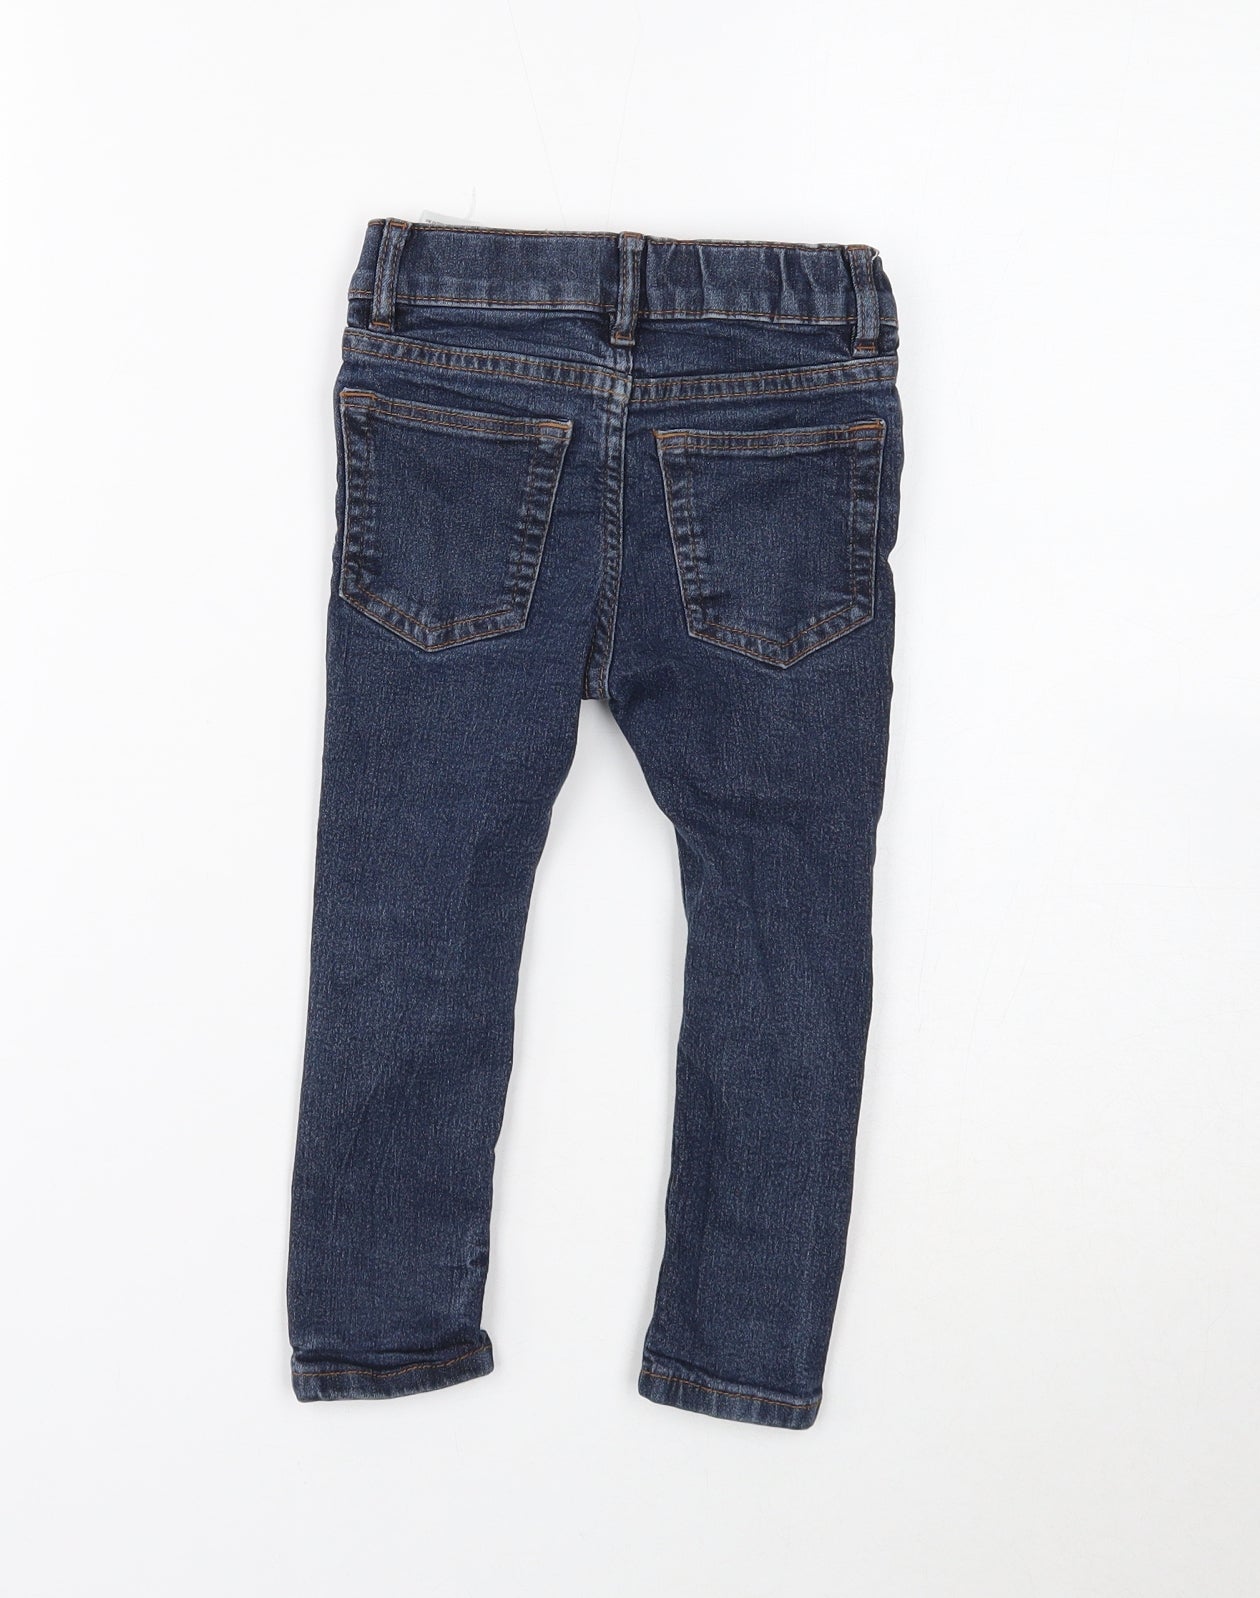 Preworn Boys Blue Cotton Skinny Jeans Size 2-3 Years Regular Button